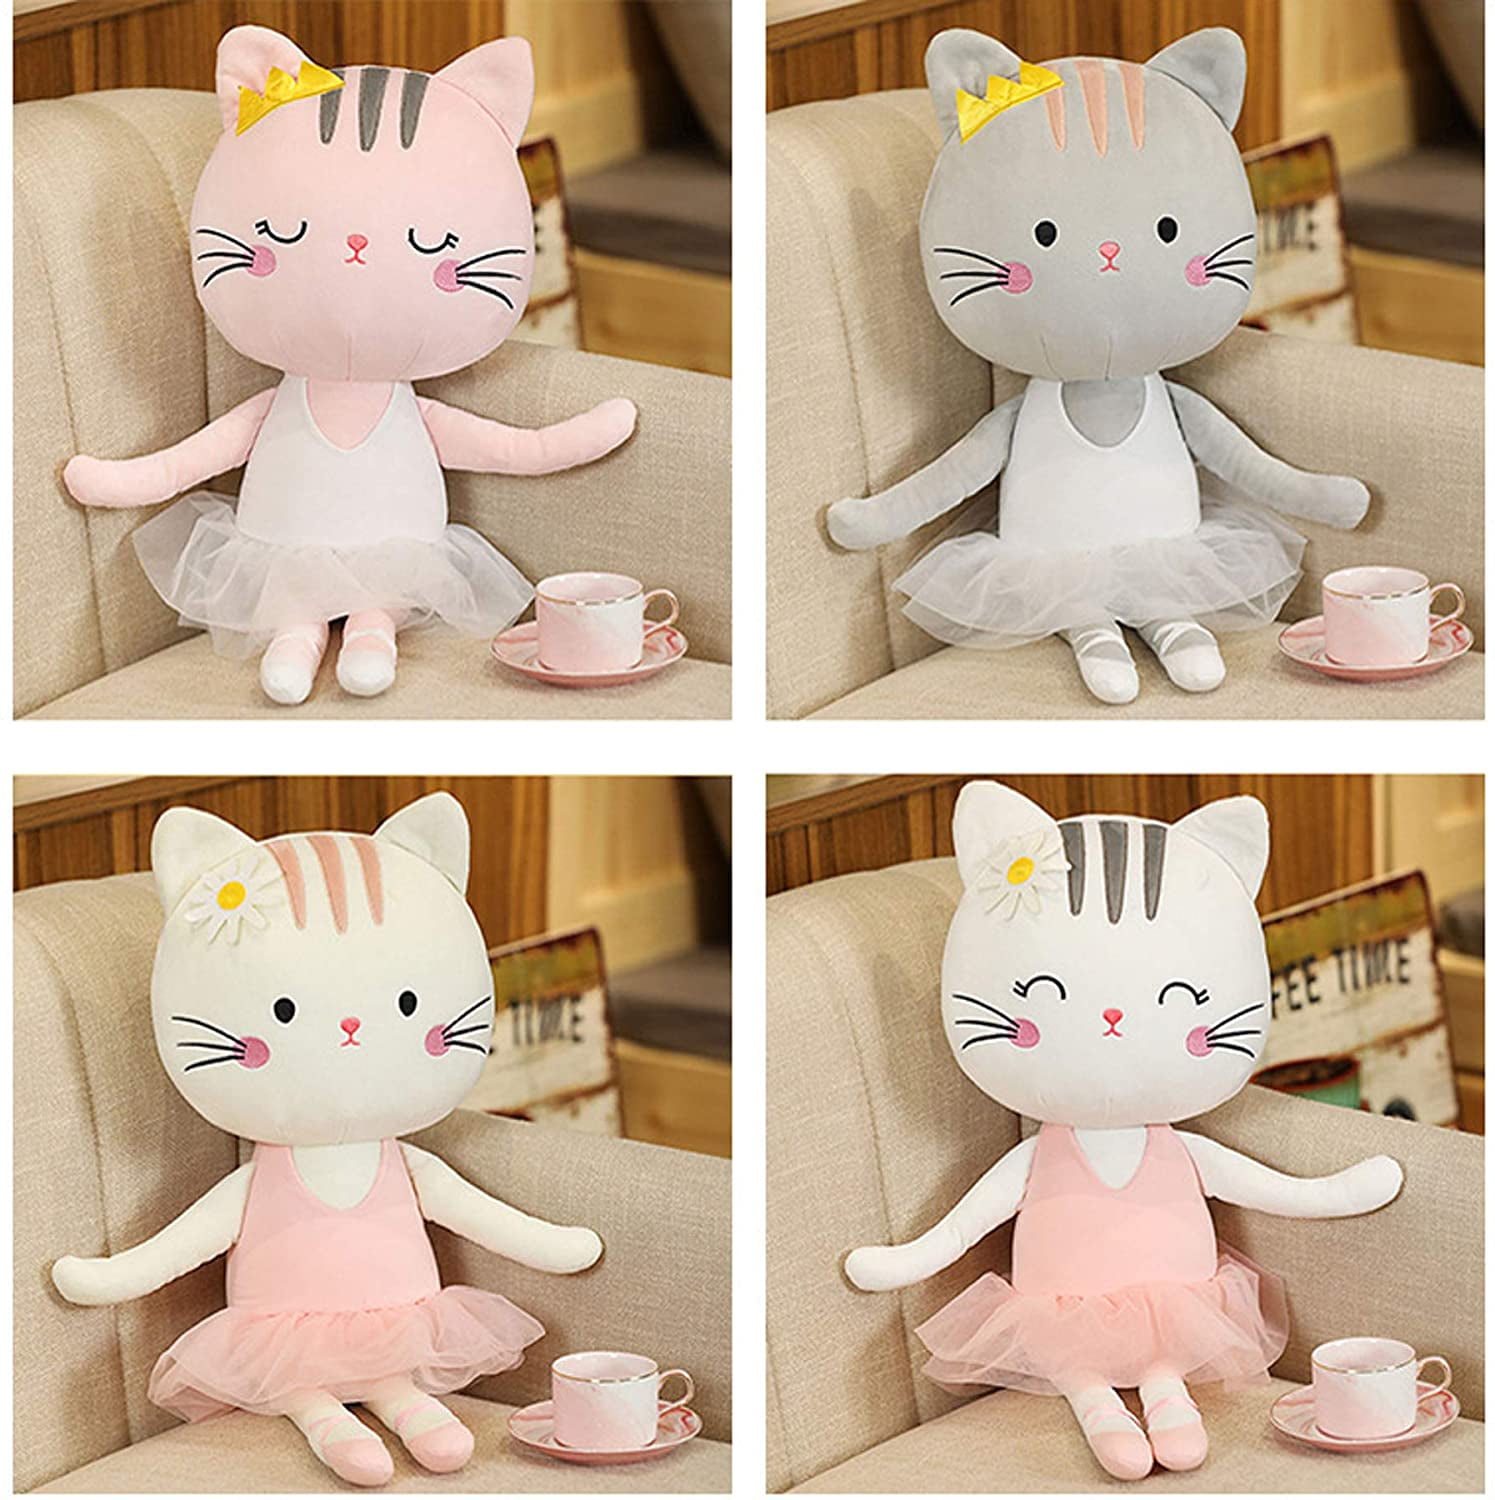 Stuffed Handmade Animal Kitten Plush Toy Soft Cute Cat Doll Ballerina Gift 38 cm 